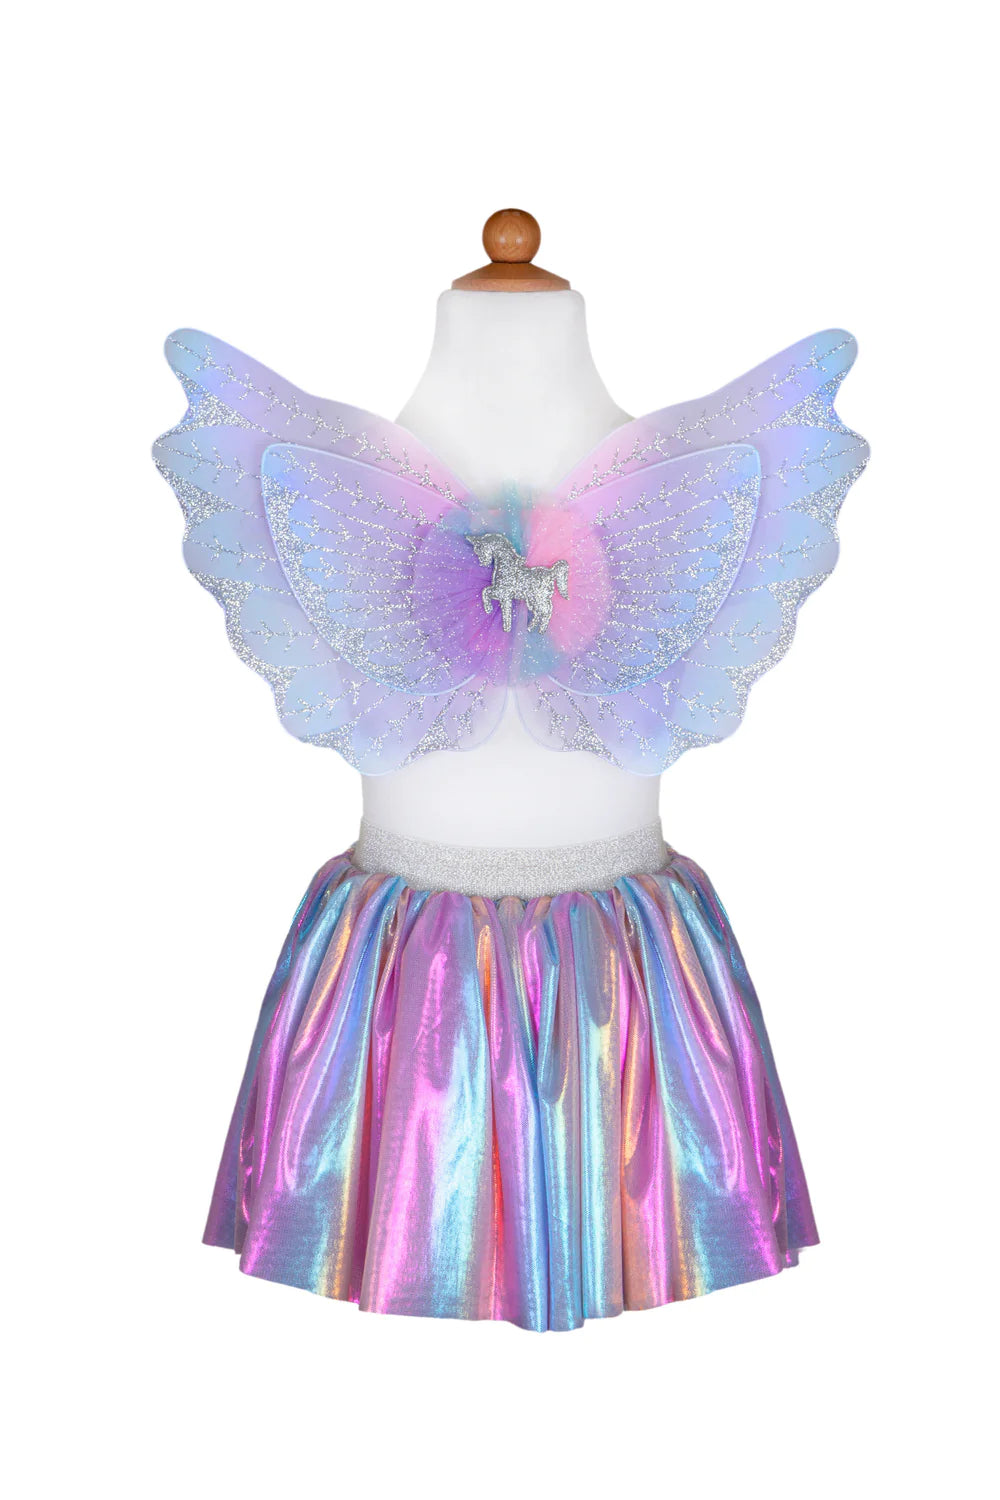 Great Pretenders Magical Unicorn Skirt & Wings Pastel